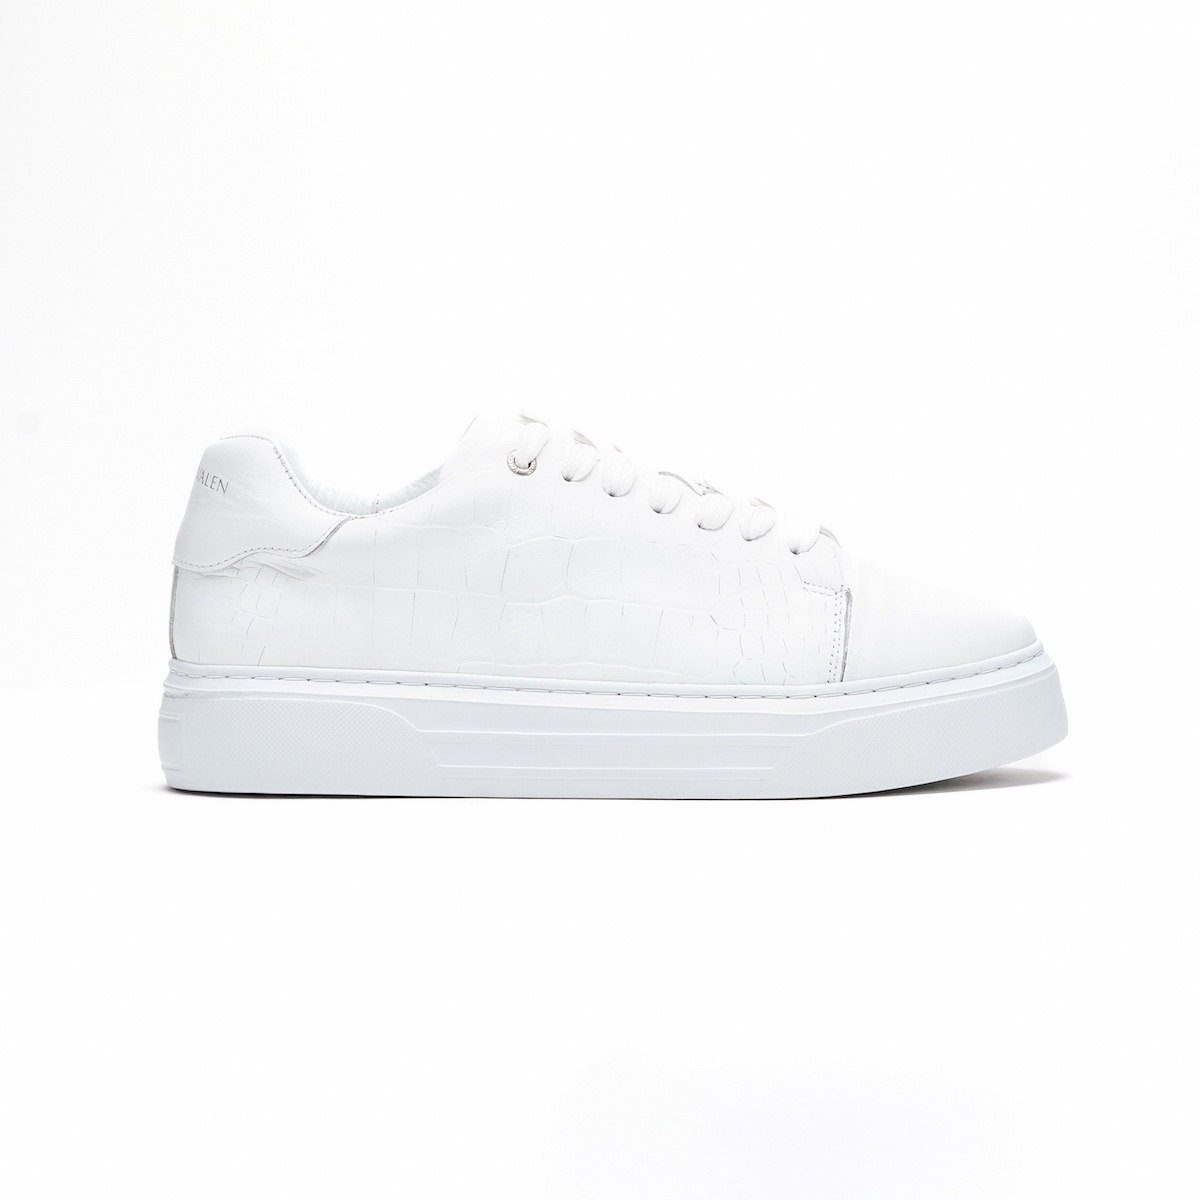 Rizz Lizz Genuine Leather Sneakers Shoes in White | Martin Valen